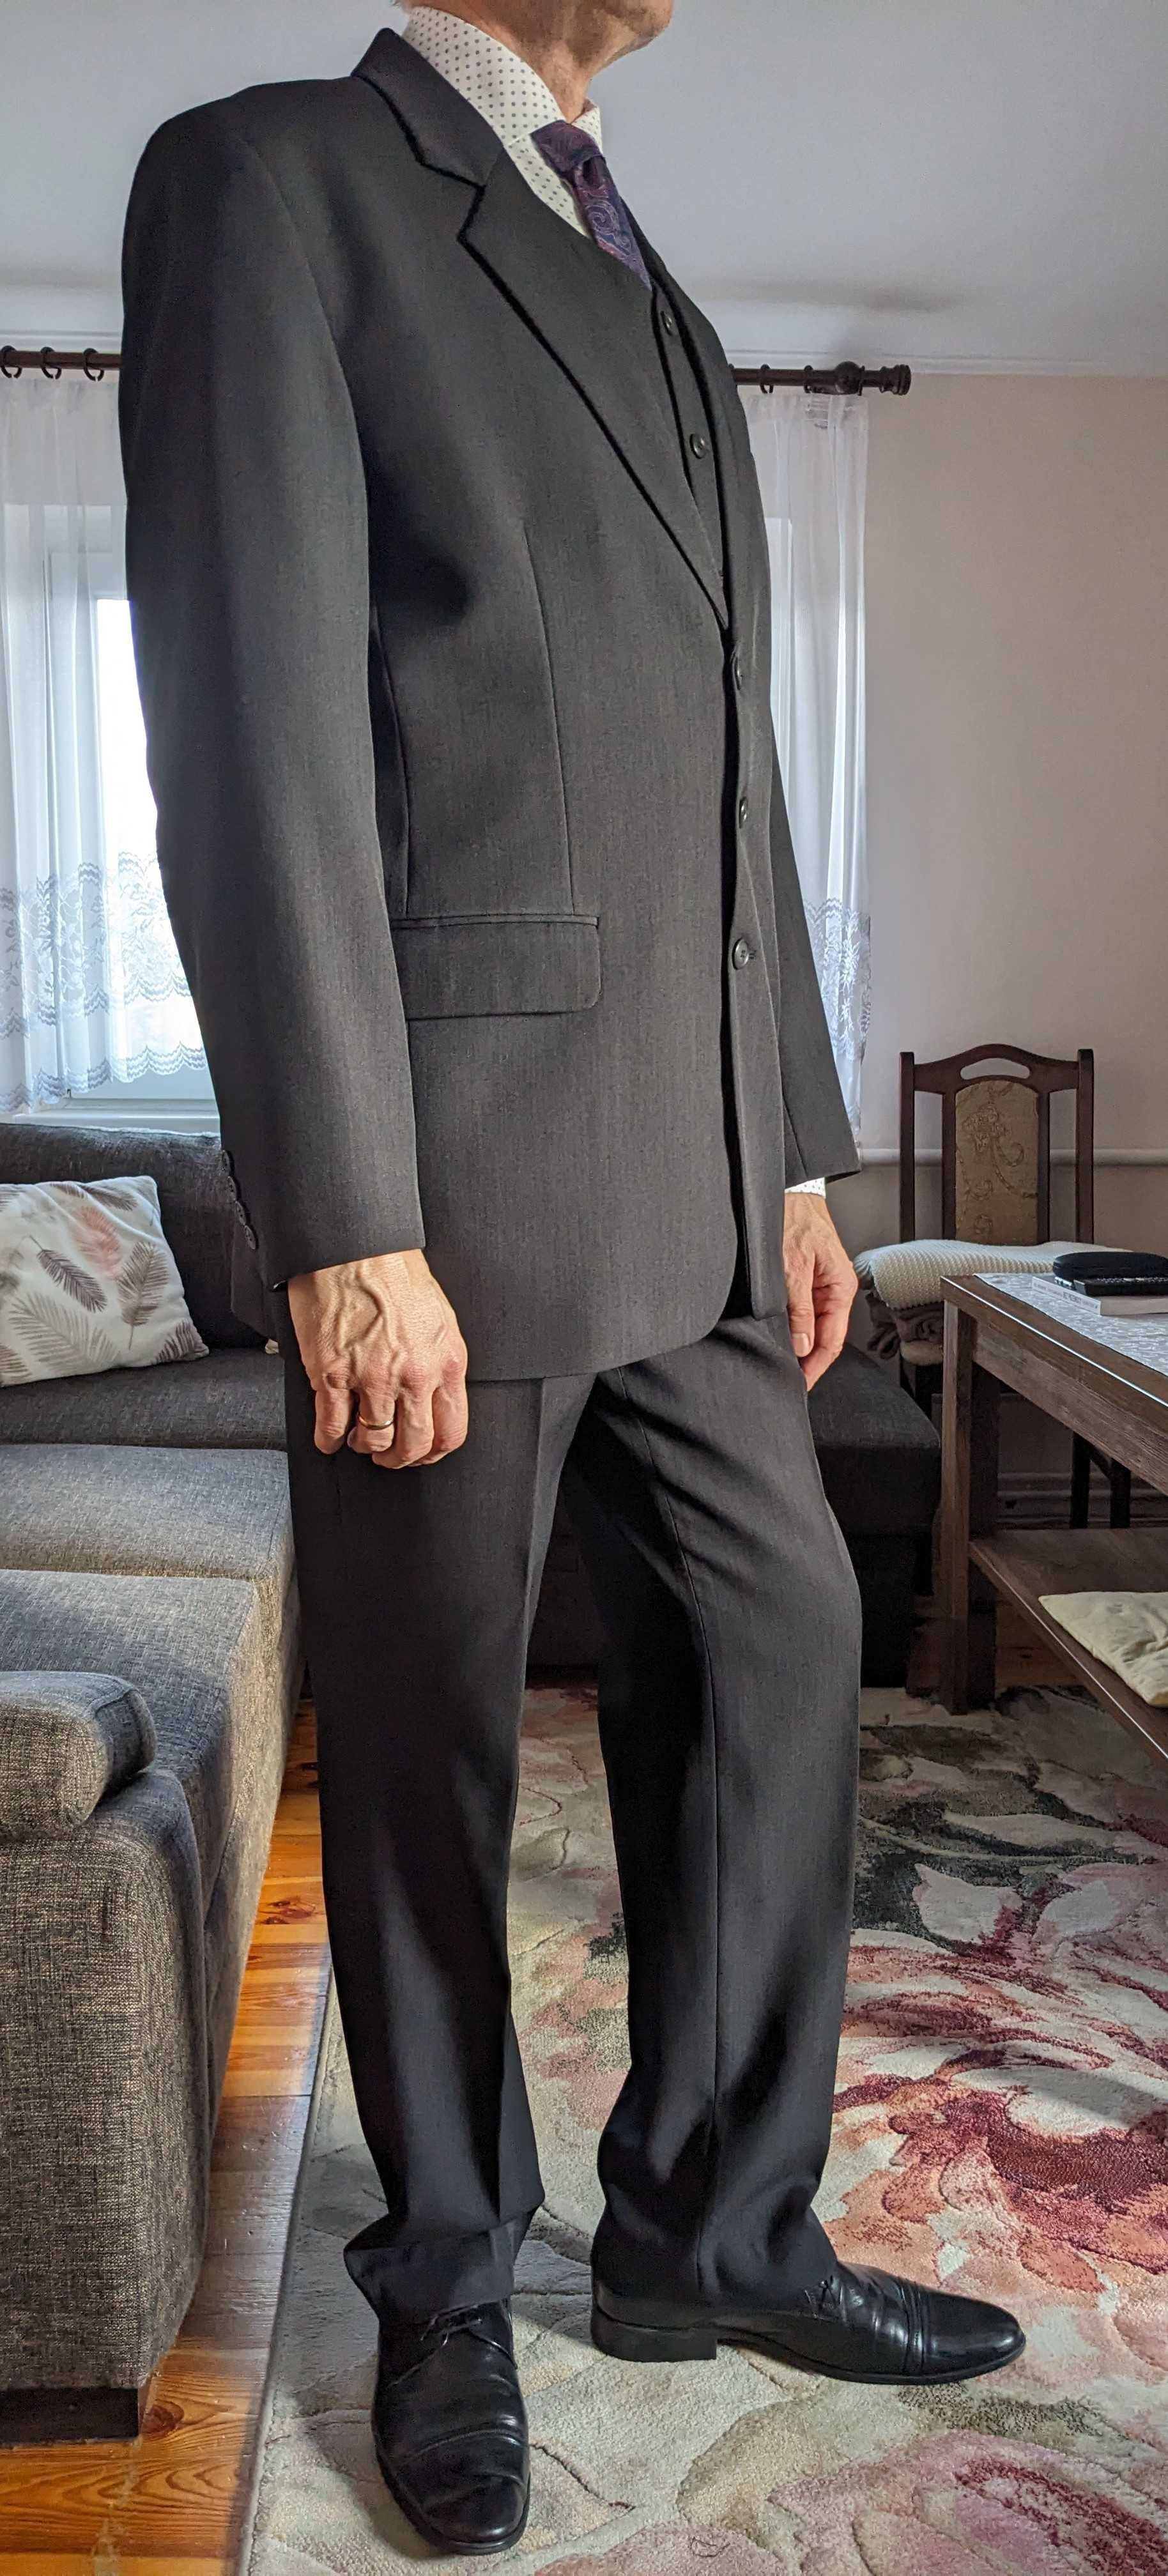 Elegancki garnitur ze spodniami i kamizelką